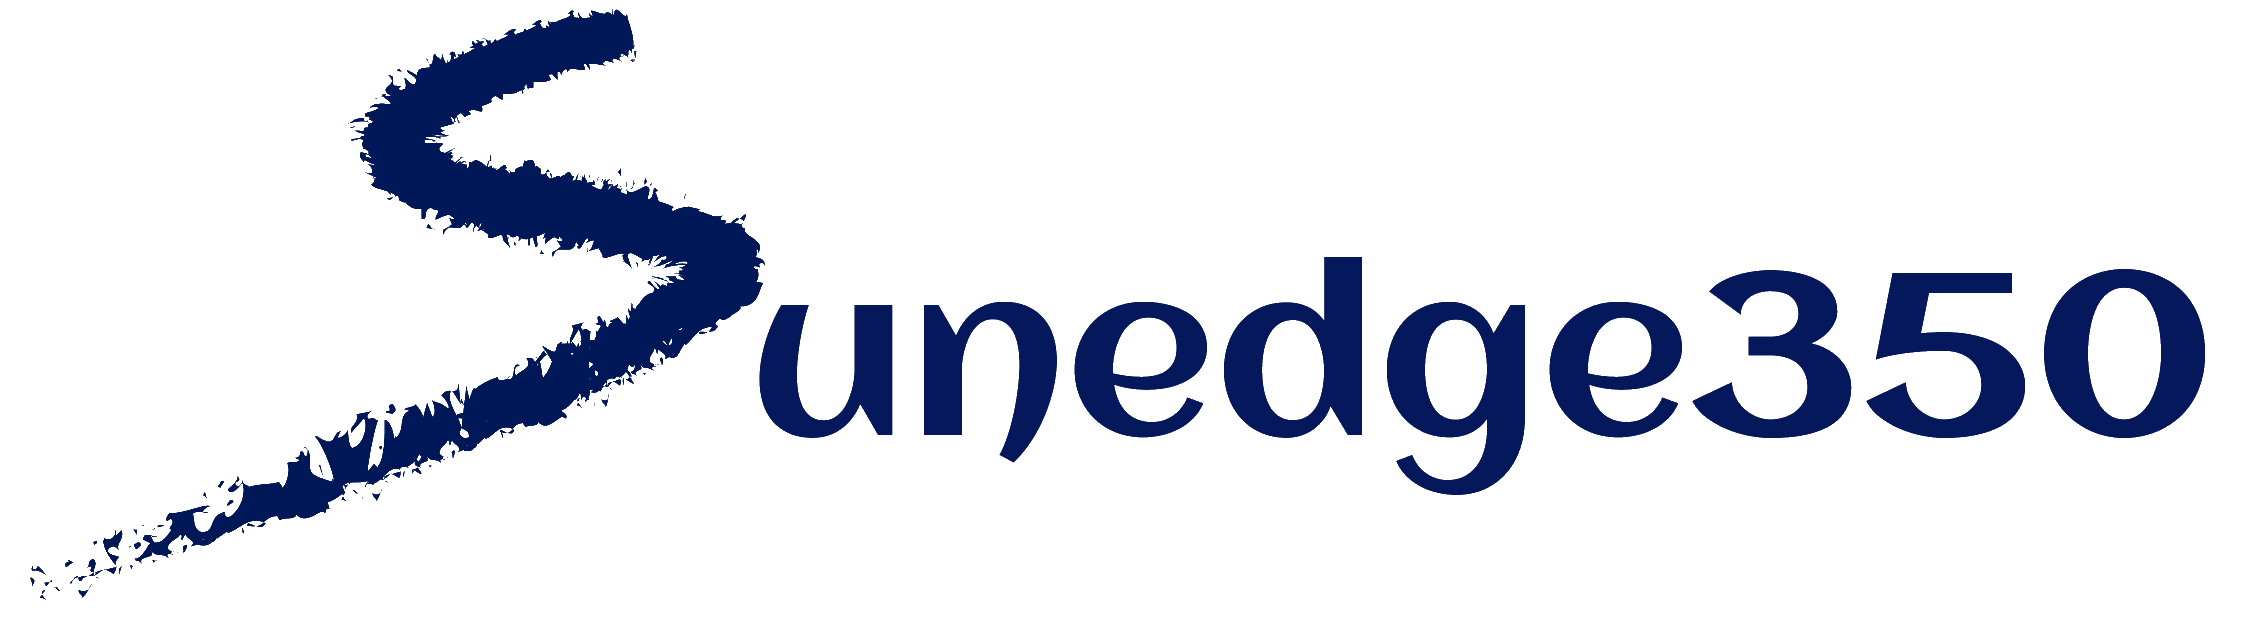 sunedge business plan pdf download